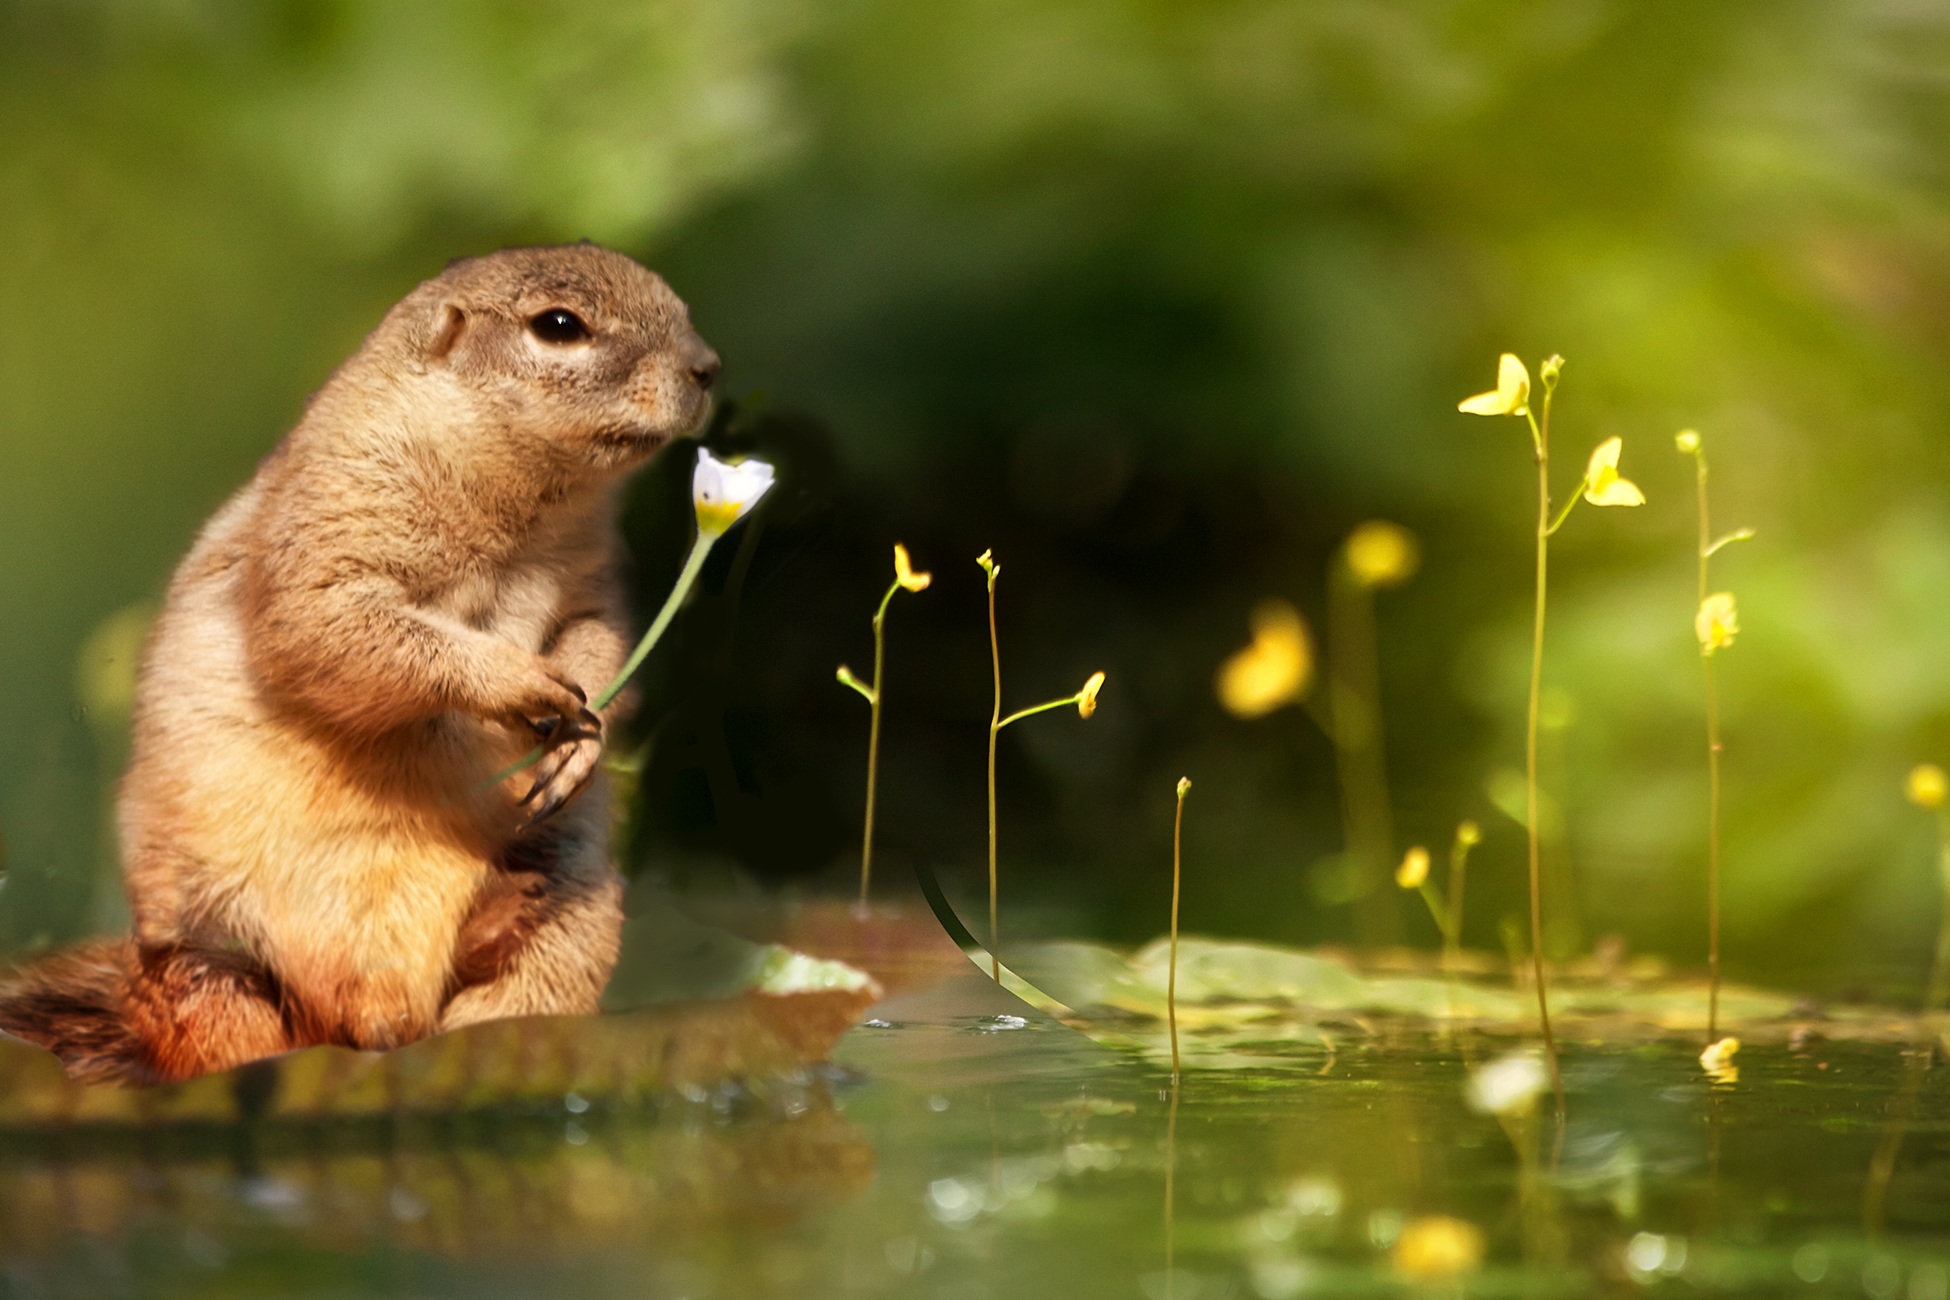 A chipmunk eats a small yellow flower.